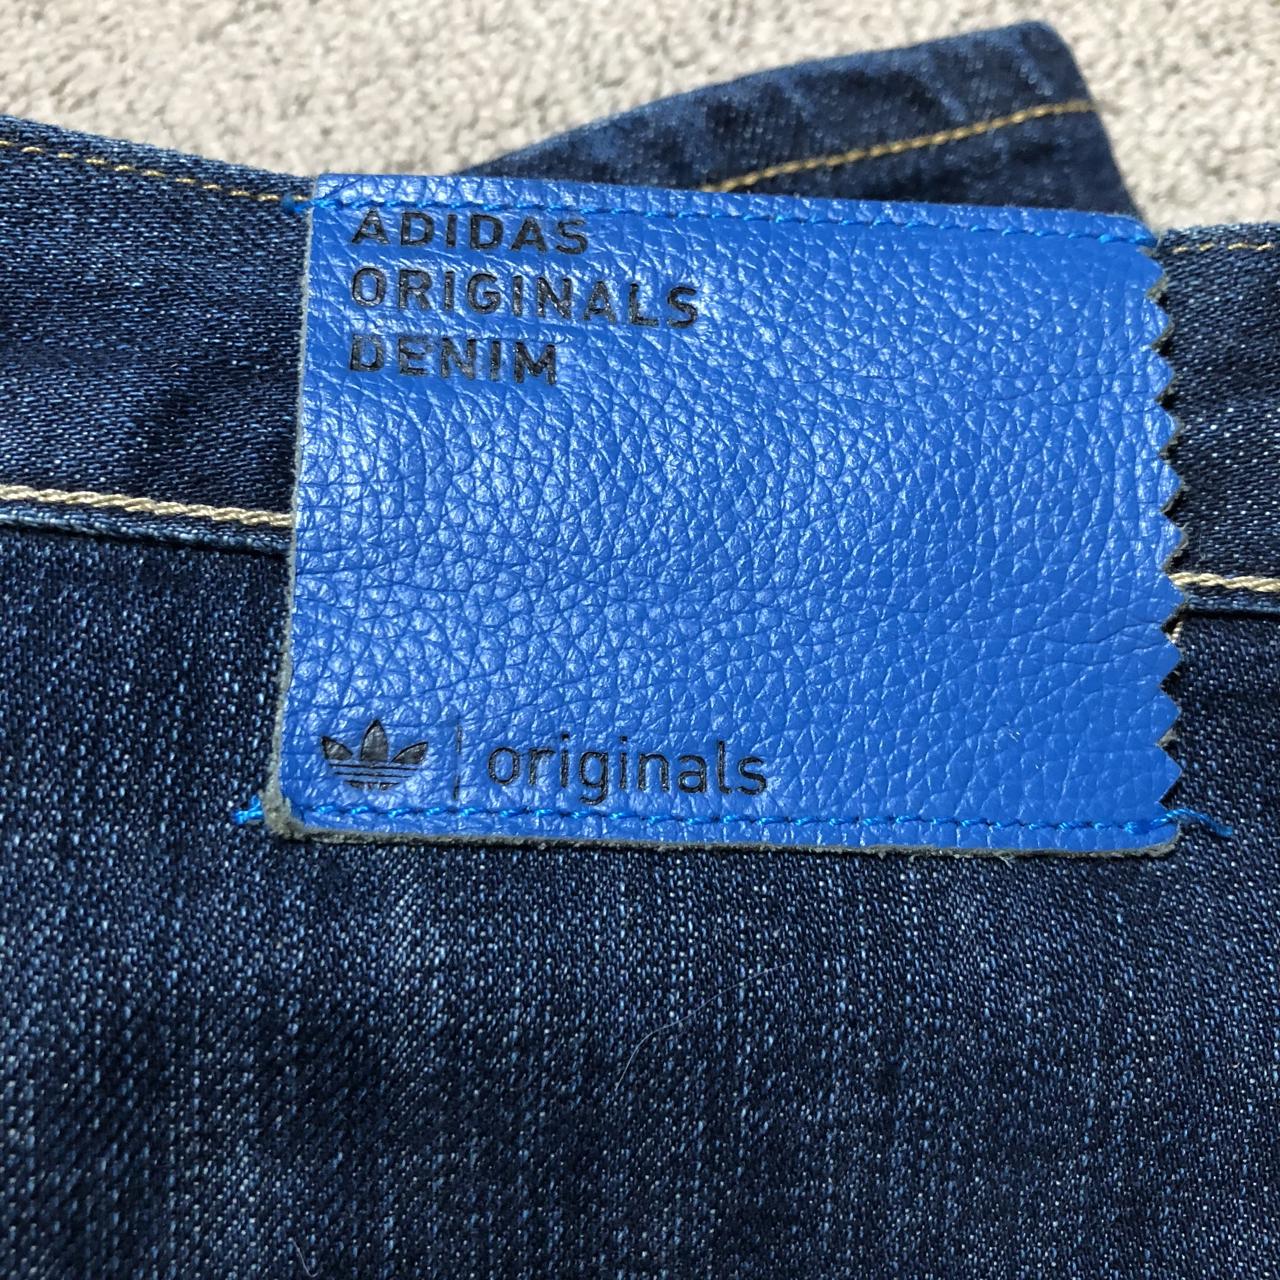 adidas Originals Men's MAD CAB Slim FIT Blue Label Jeans (28 34) :  Amazon.co.uk: Fashion